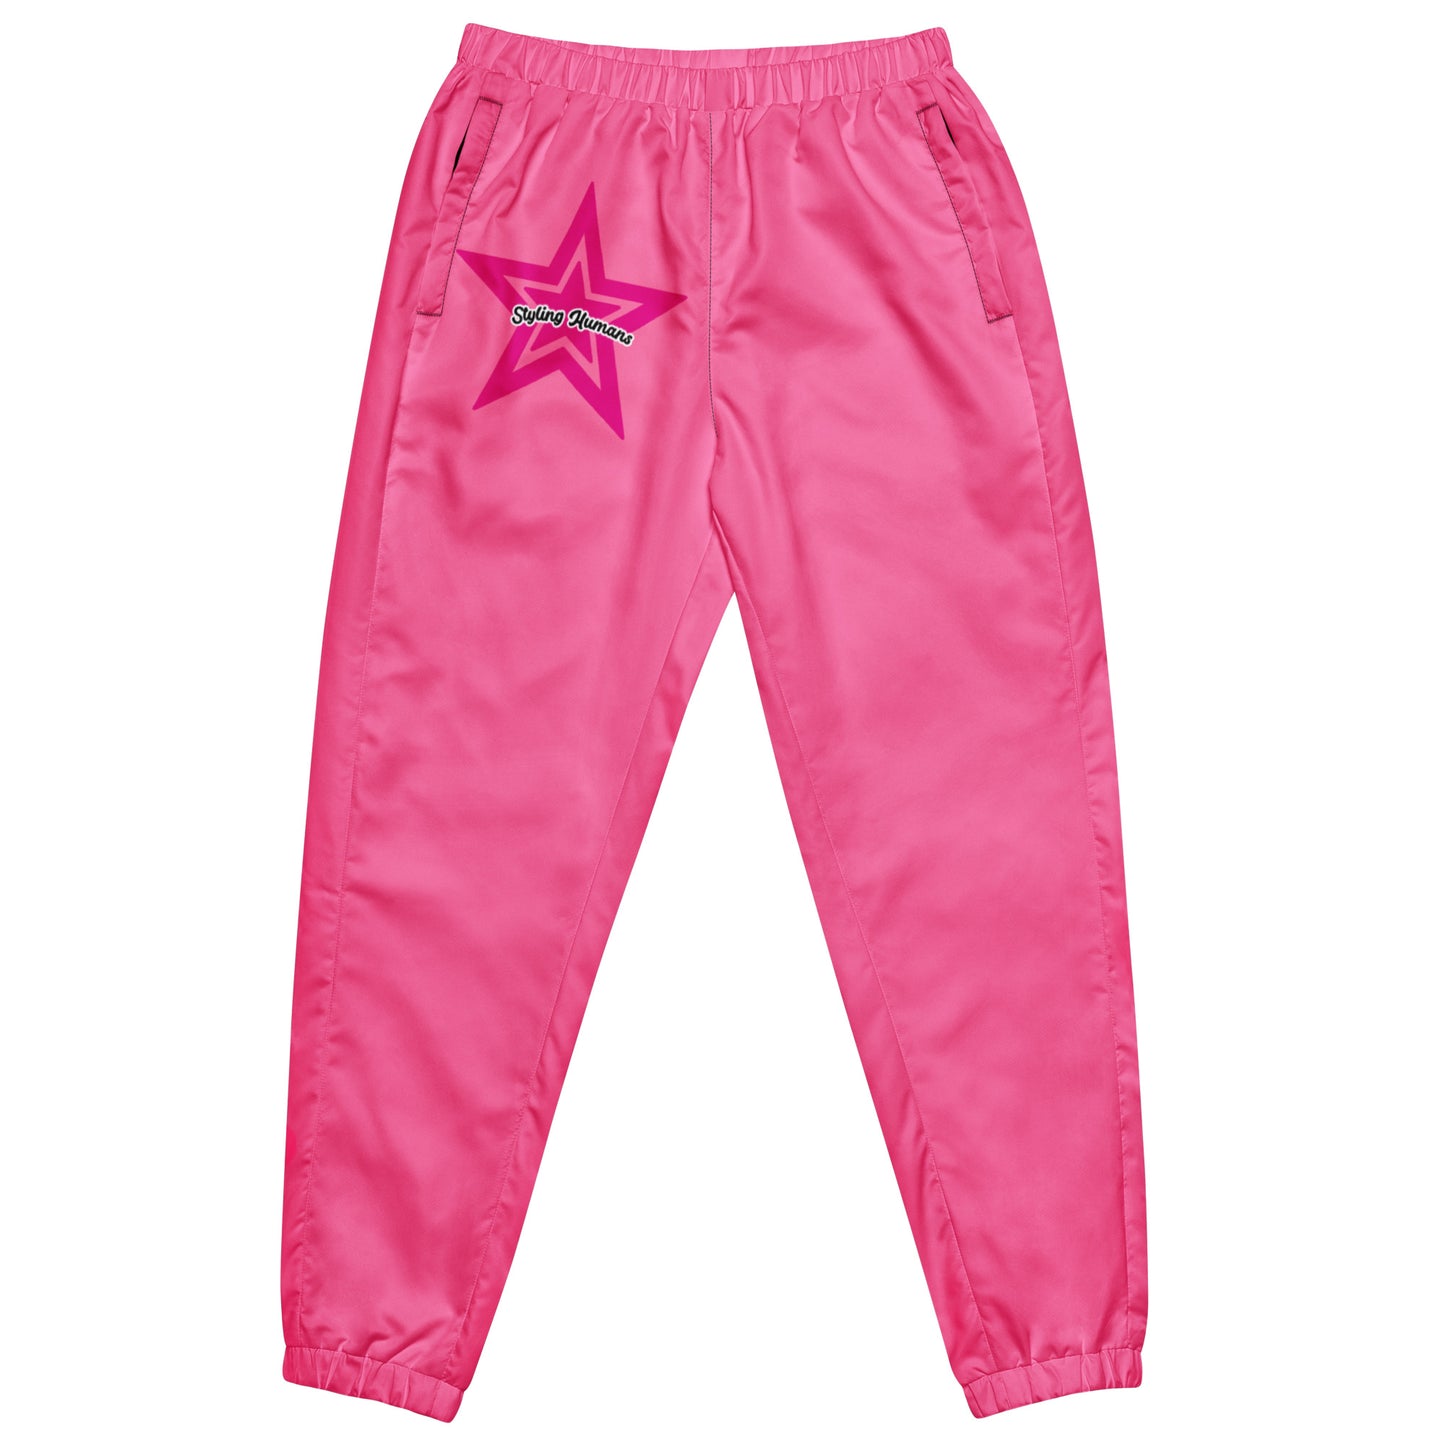 Flokk Pink Unisex track pants